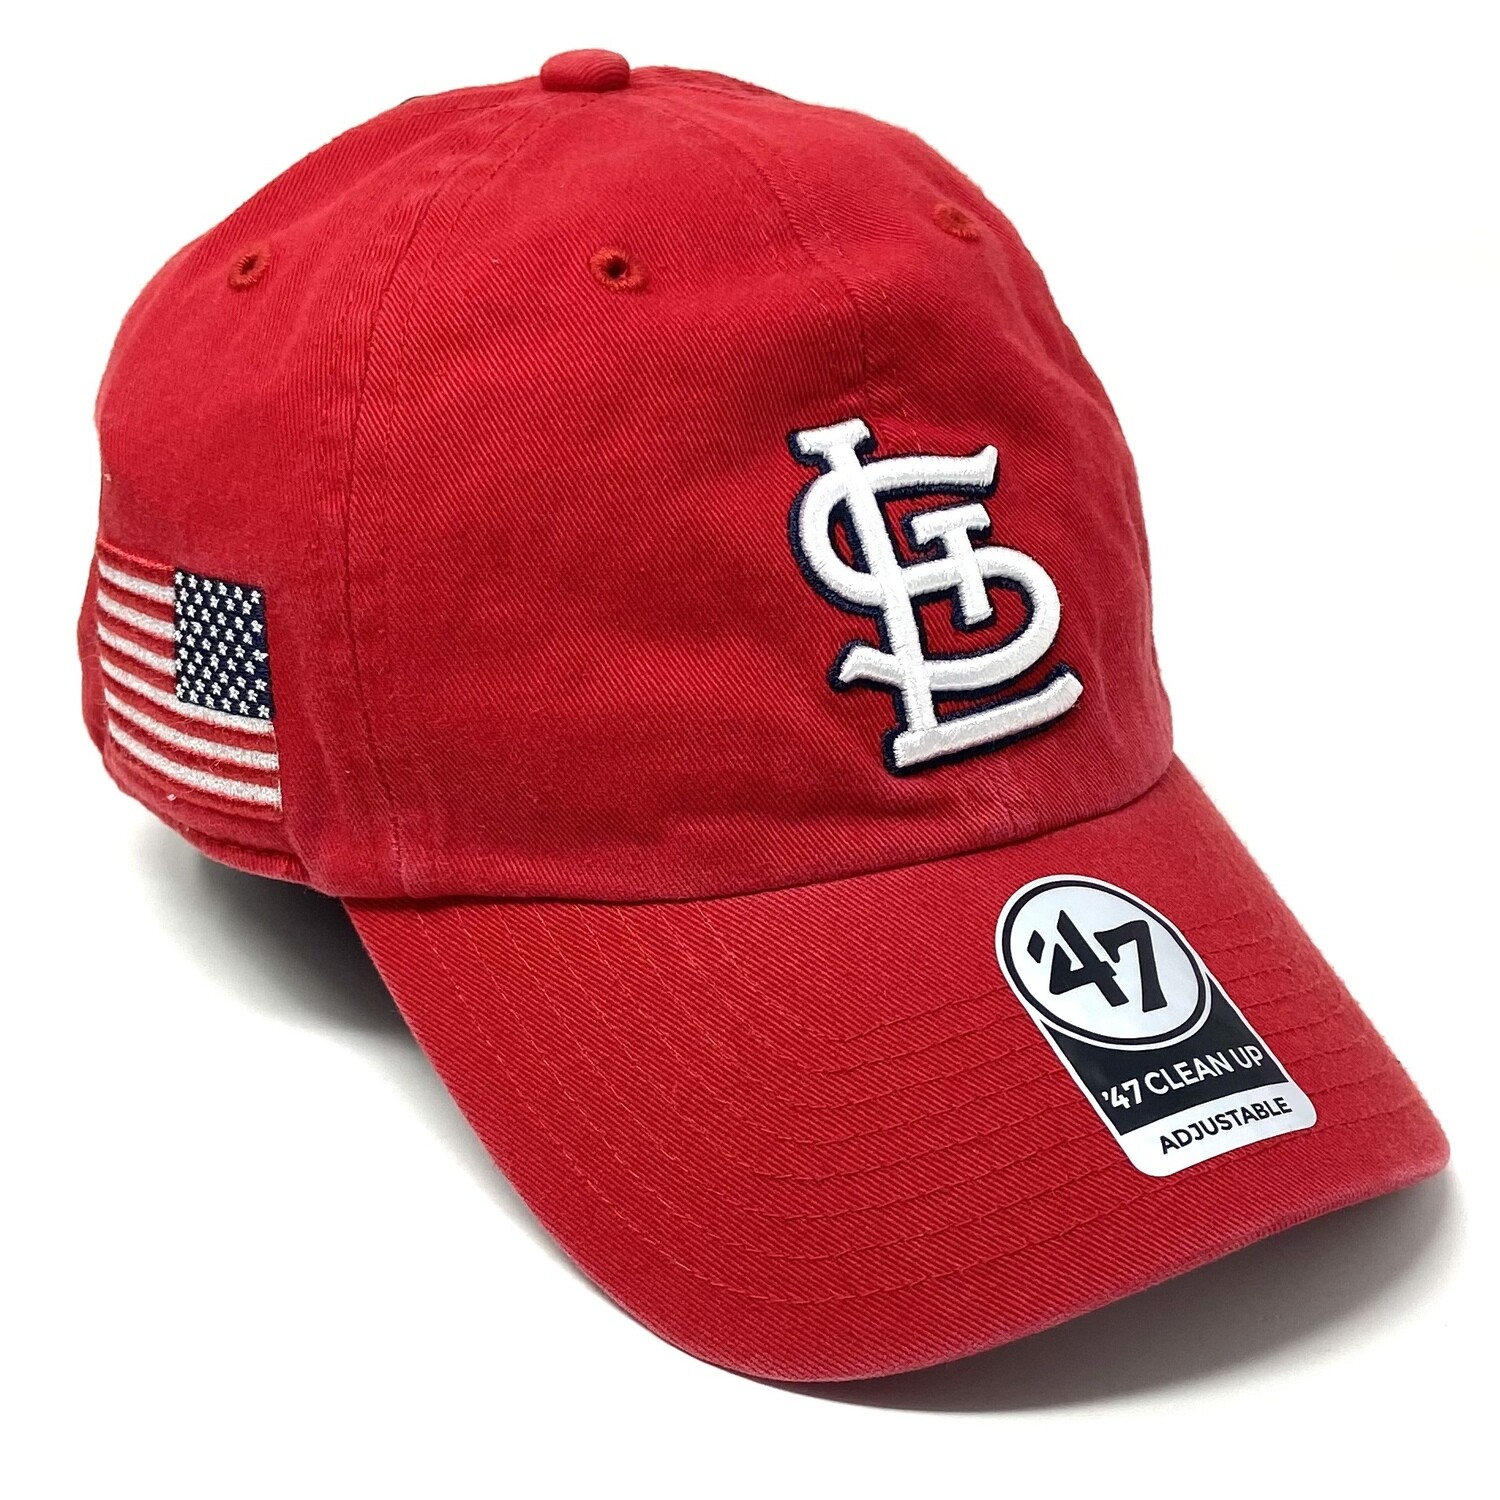 Men's St. Louis Cardinals '47 Red Clean Up Adjustable Hat